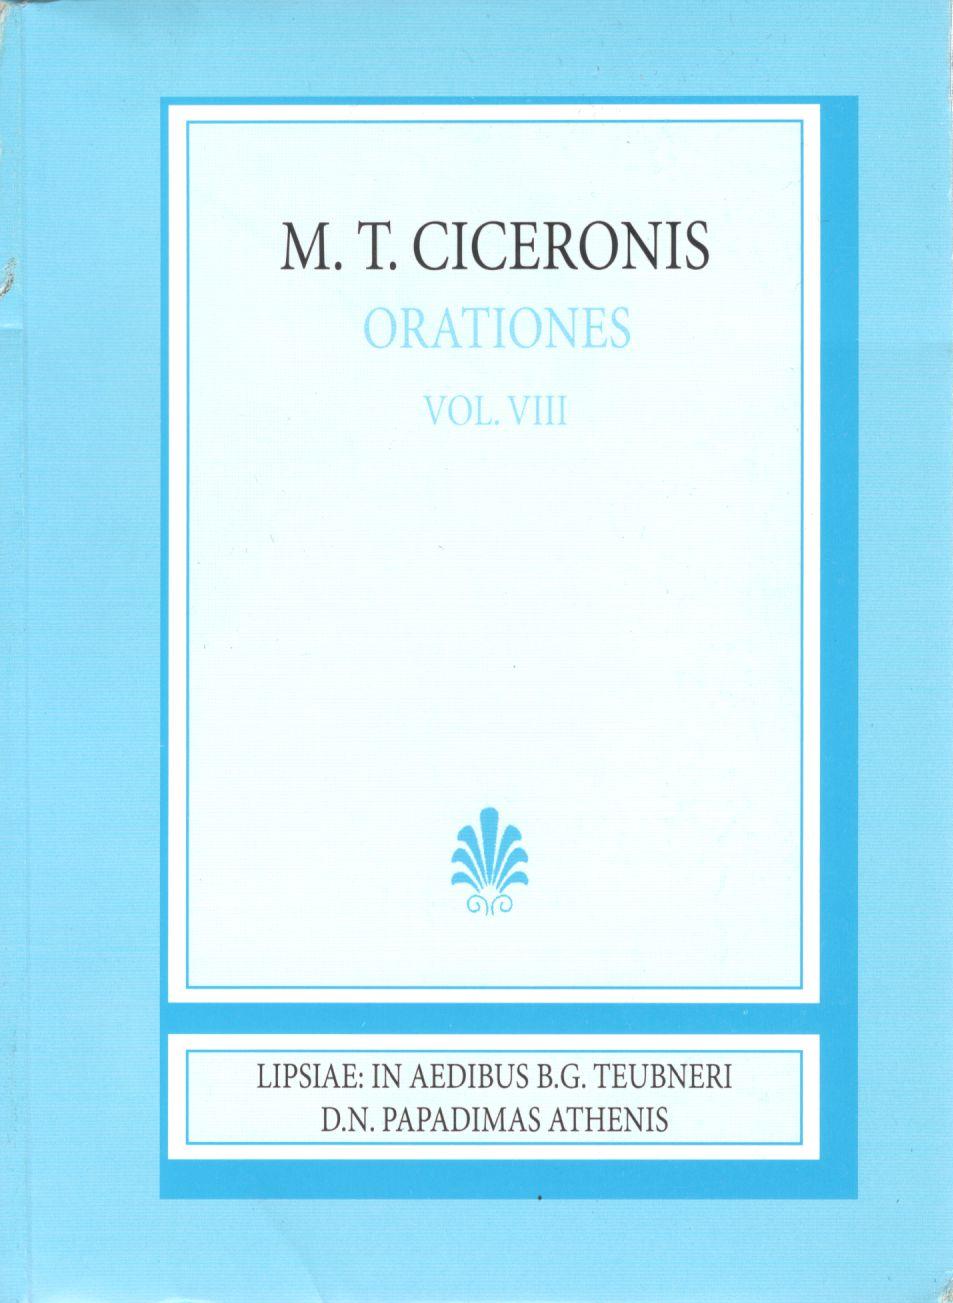 M. T. Ciceronis, Orationes & Fragmenta Oratorium, Vol. VIII [Μάρκου Τύλλιου Κικέρωνος, Λόγοι, τ. Η']